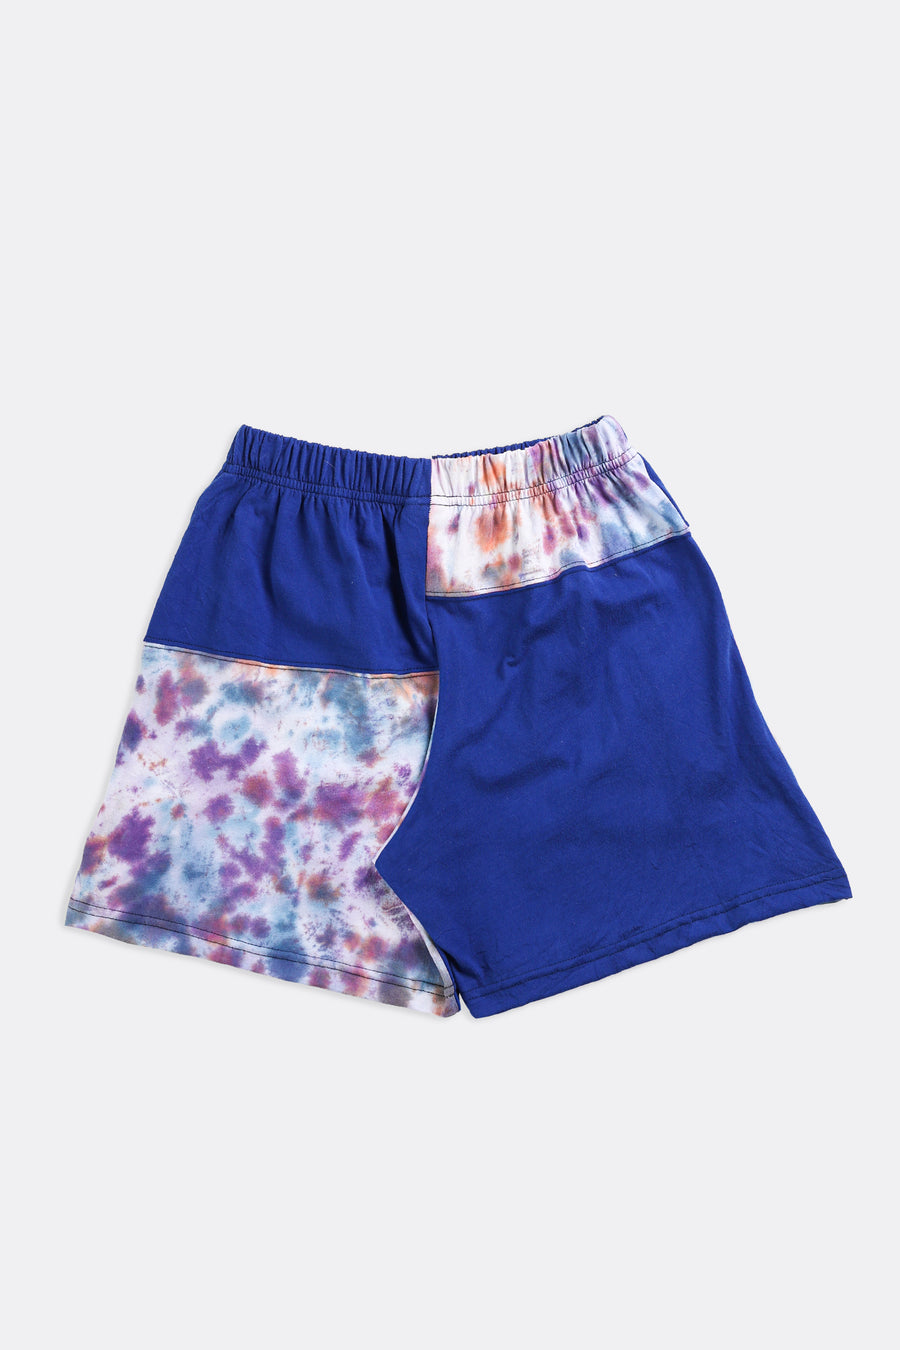 Unisex Rework Polo Patchwork Tee Shorts - Women's XS, Men's XXS